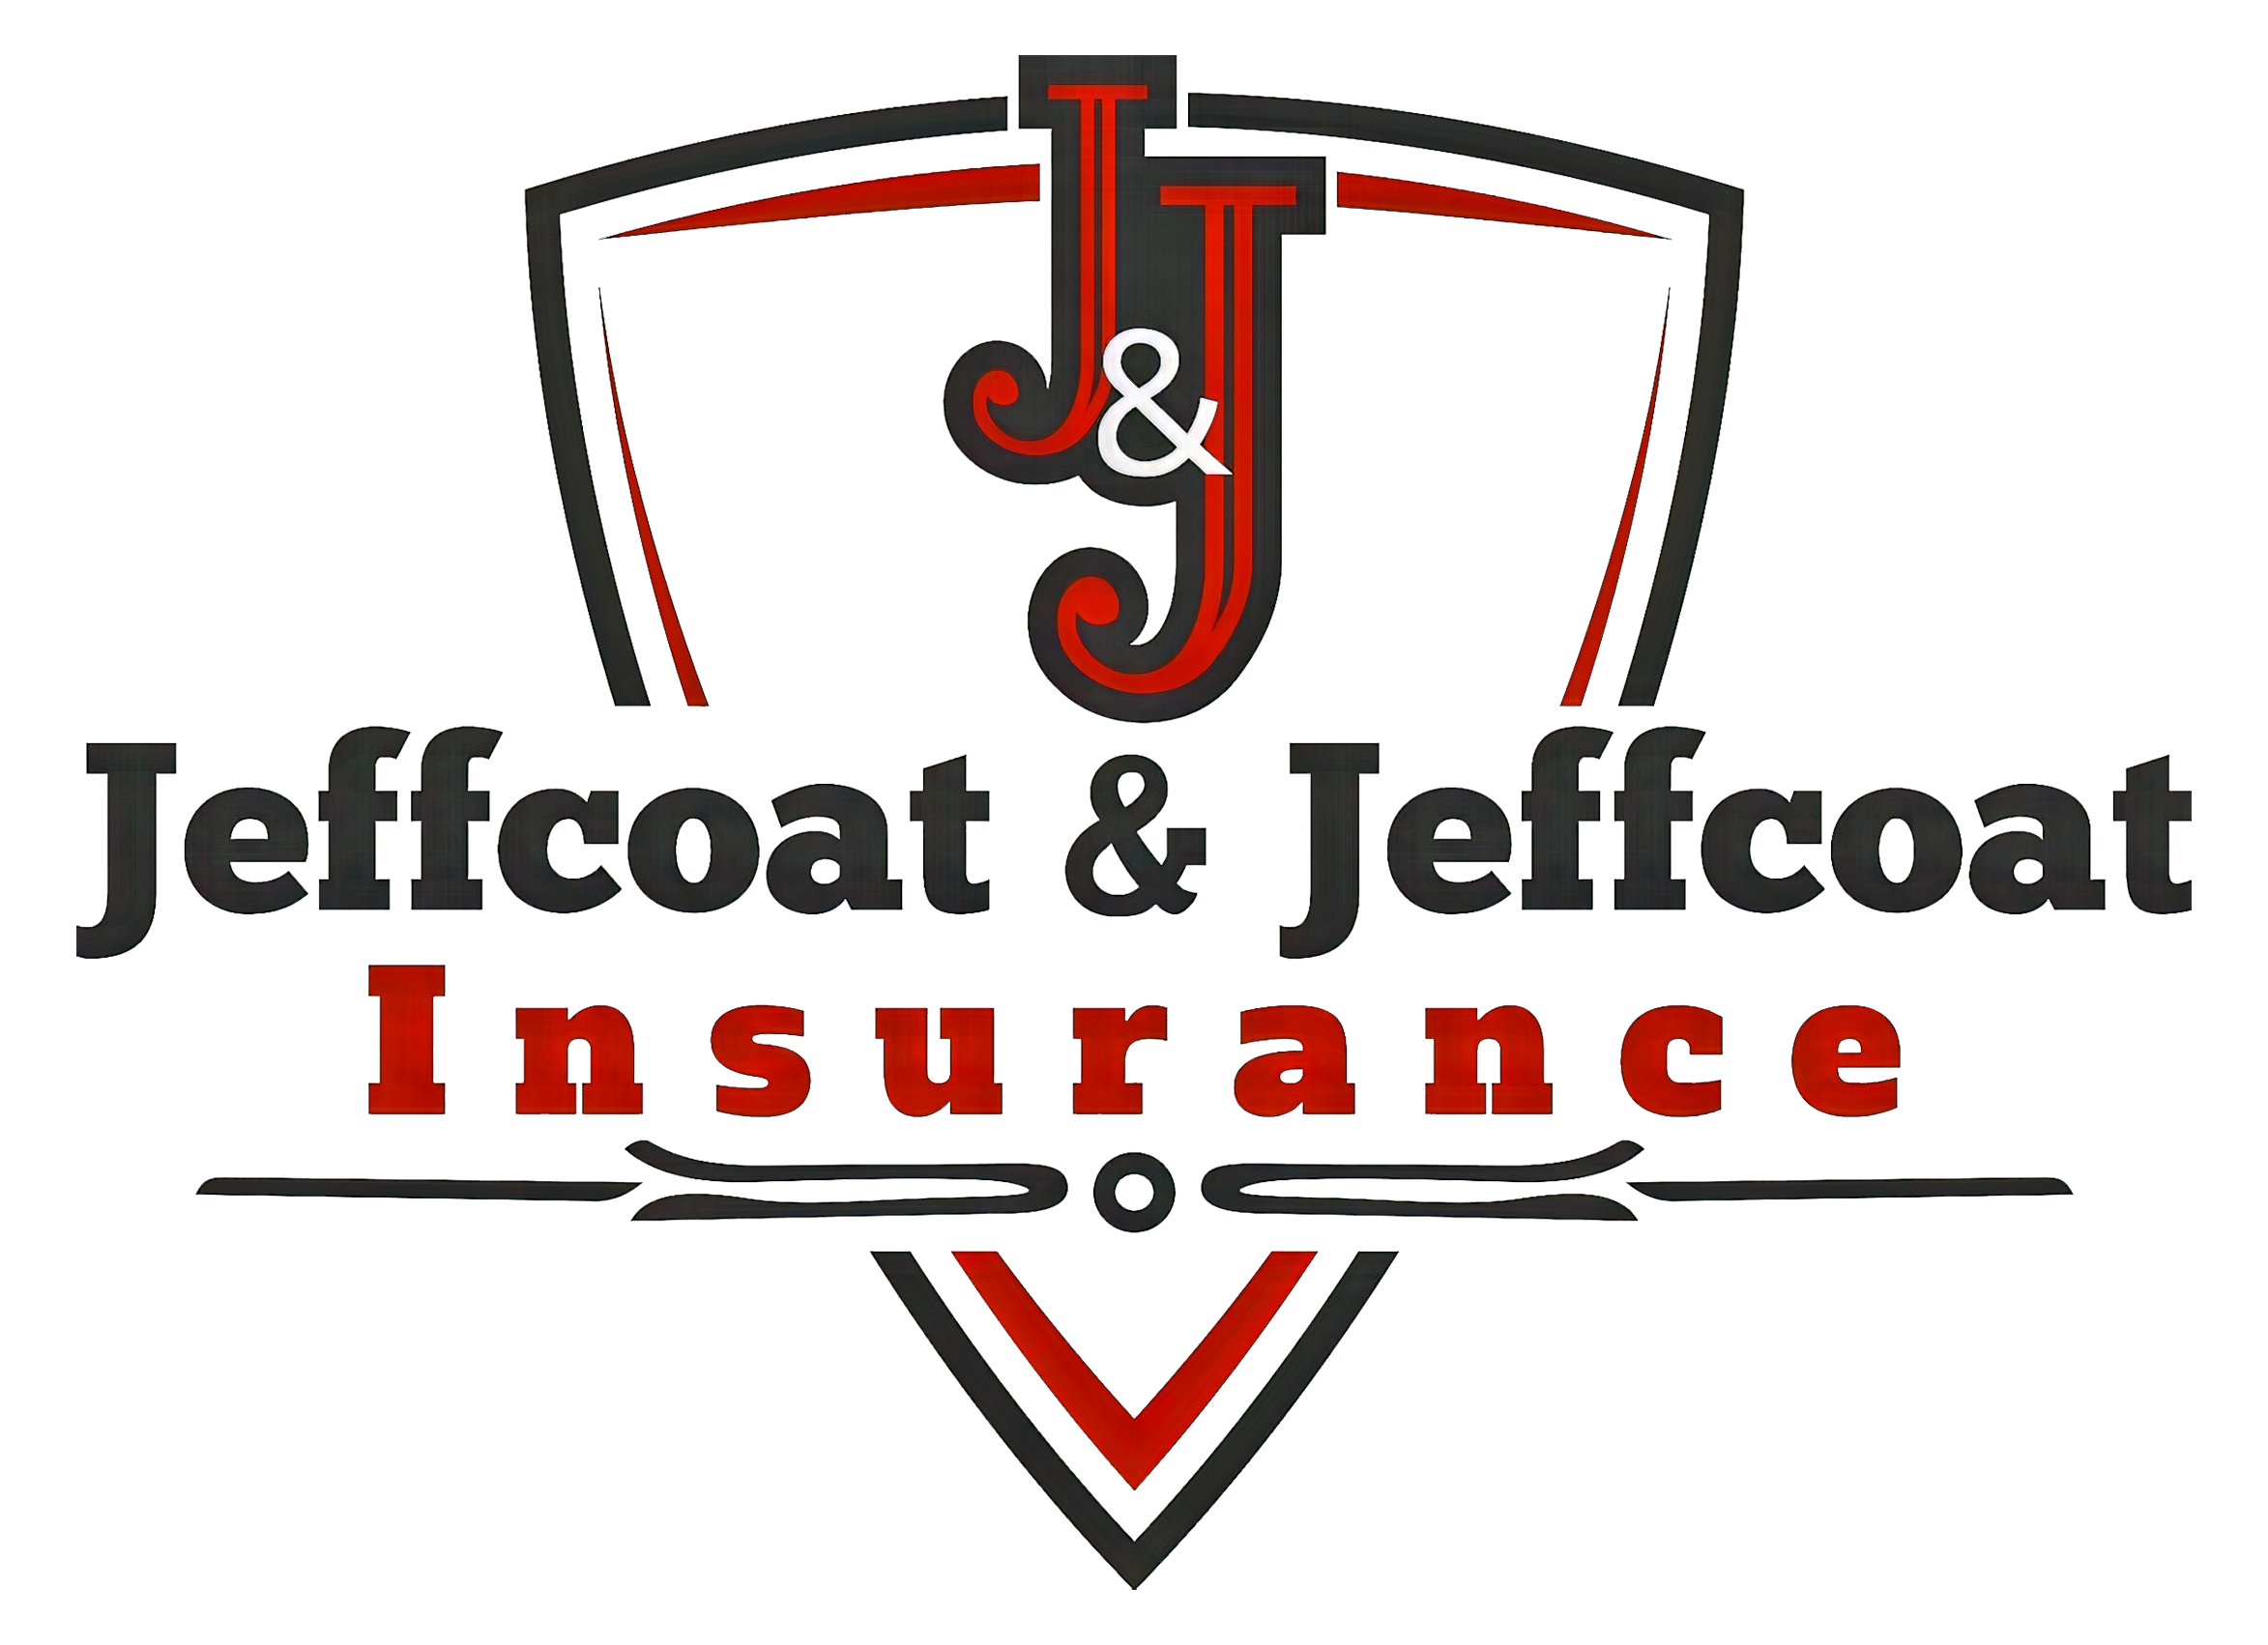 Jeffcoat & Jeffcoat Insurance